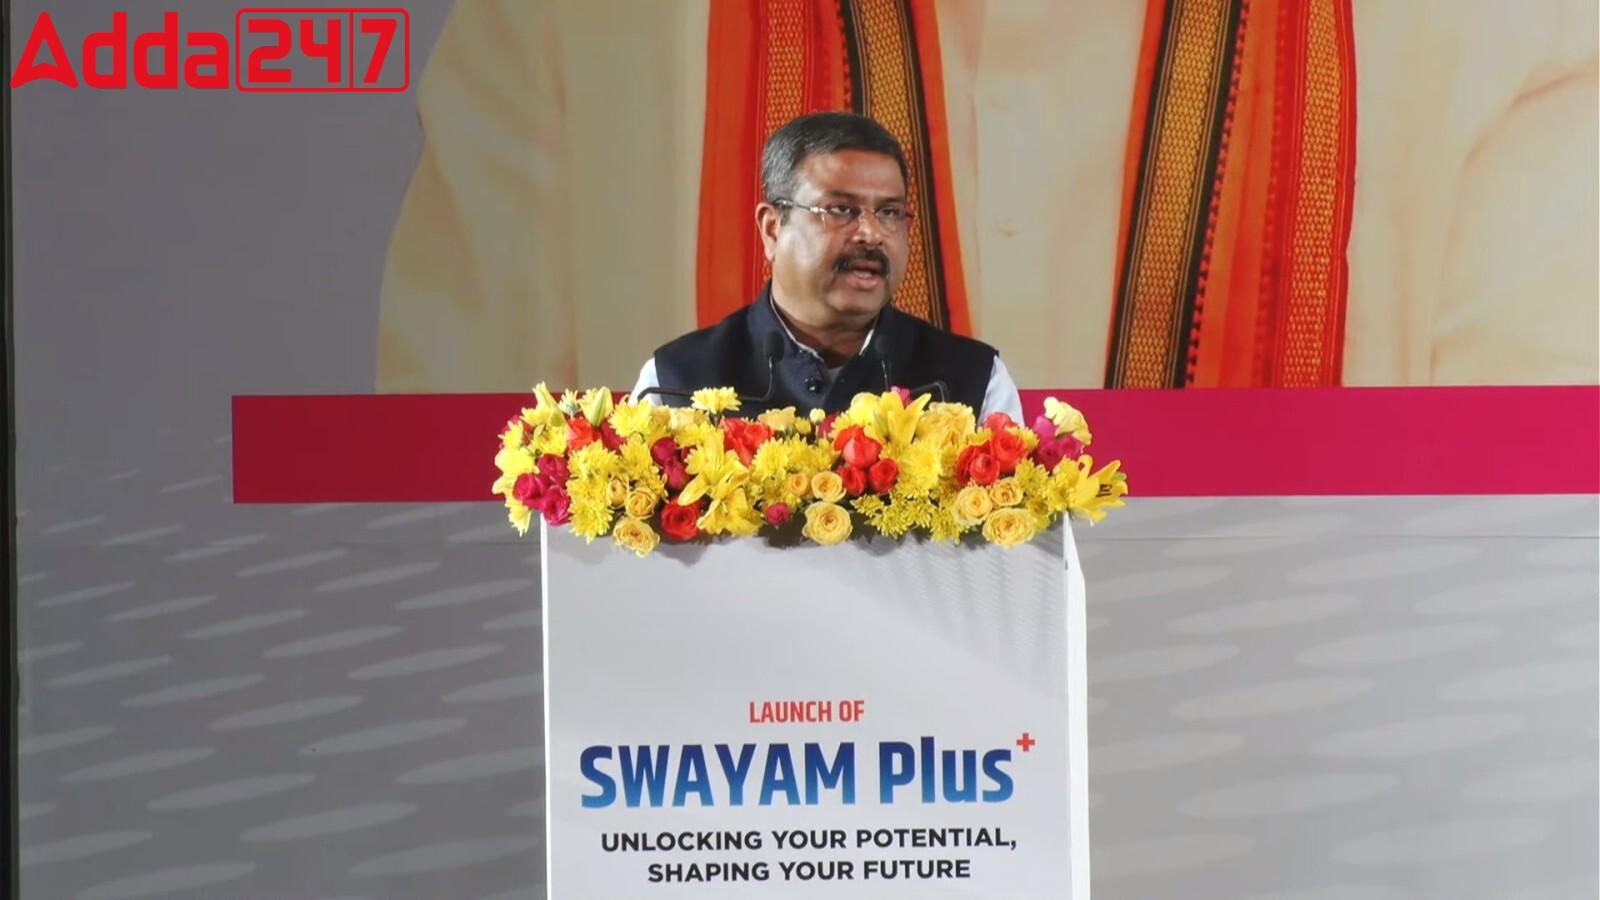 Education Minister launches SWAYAM Plus platform